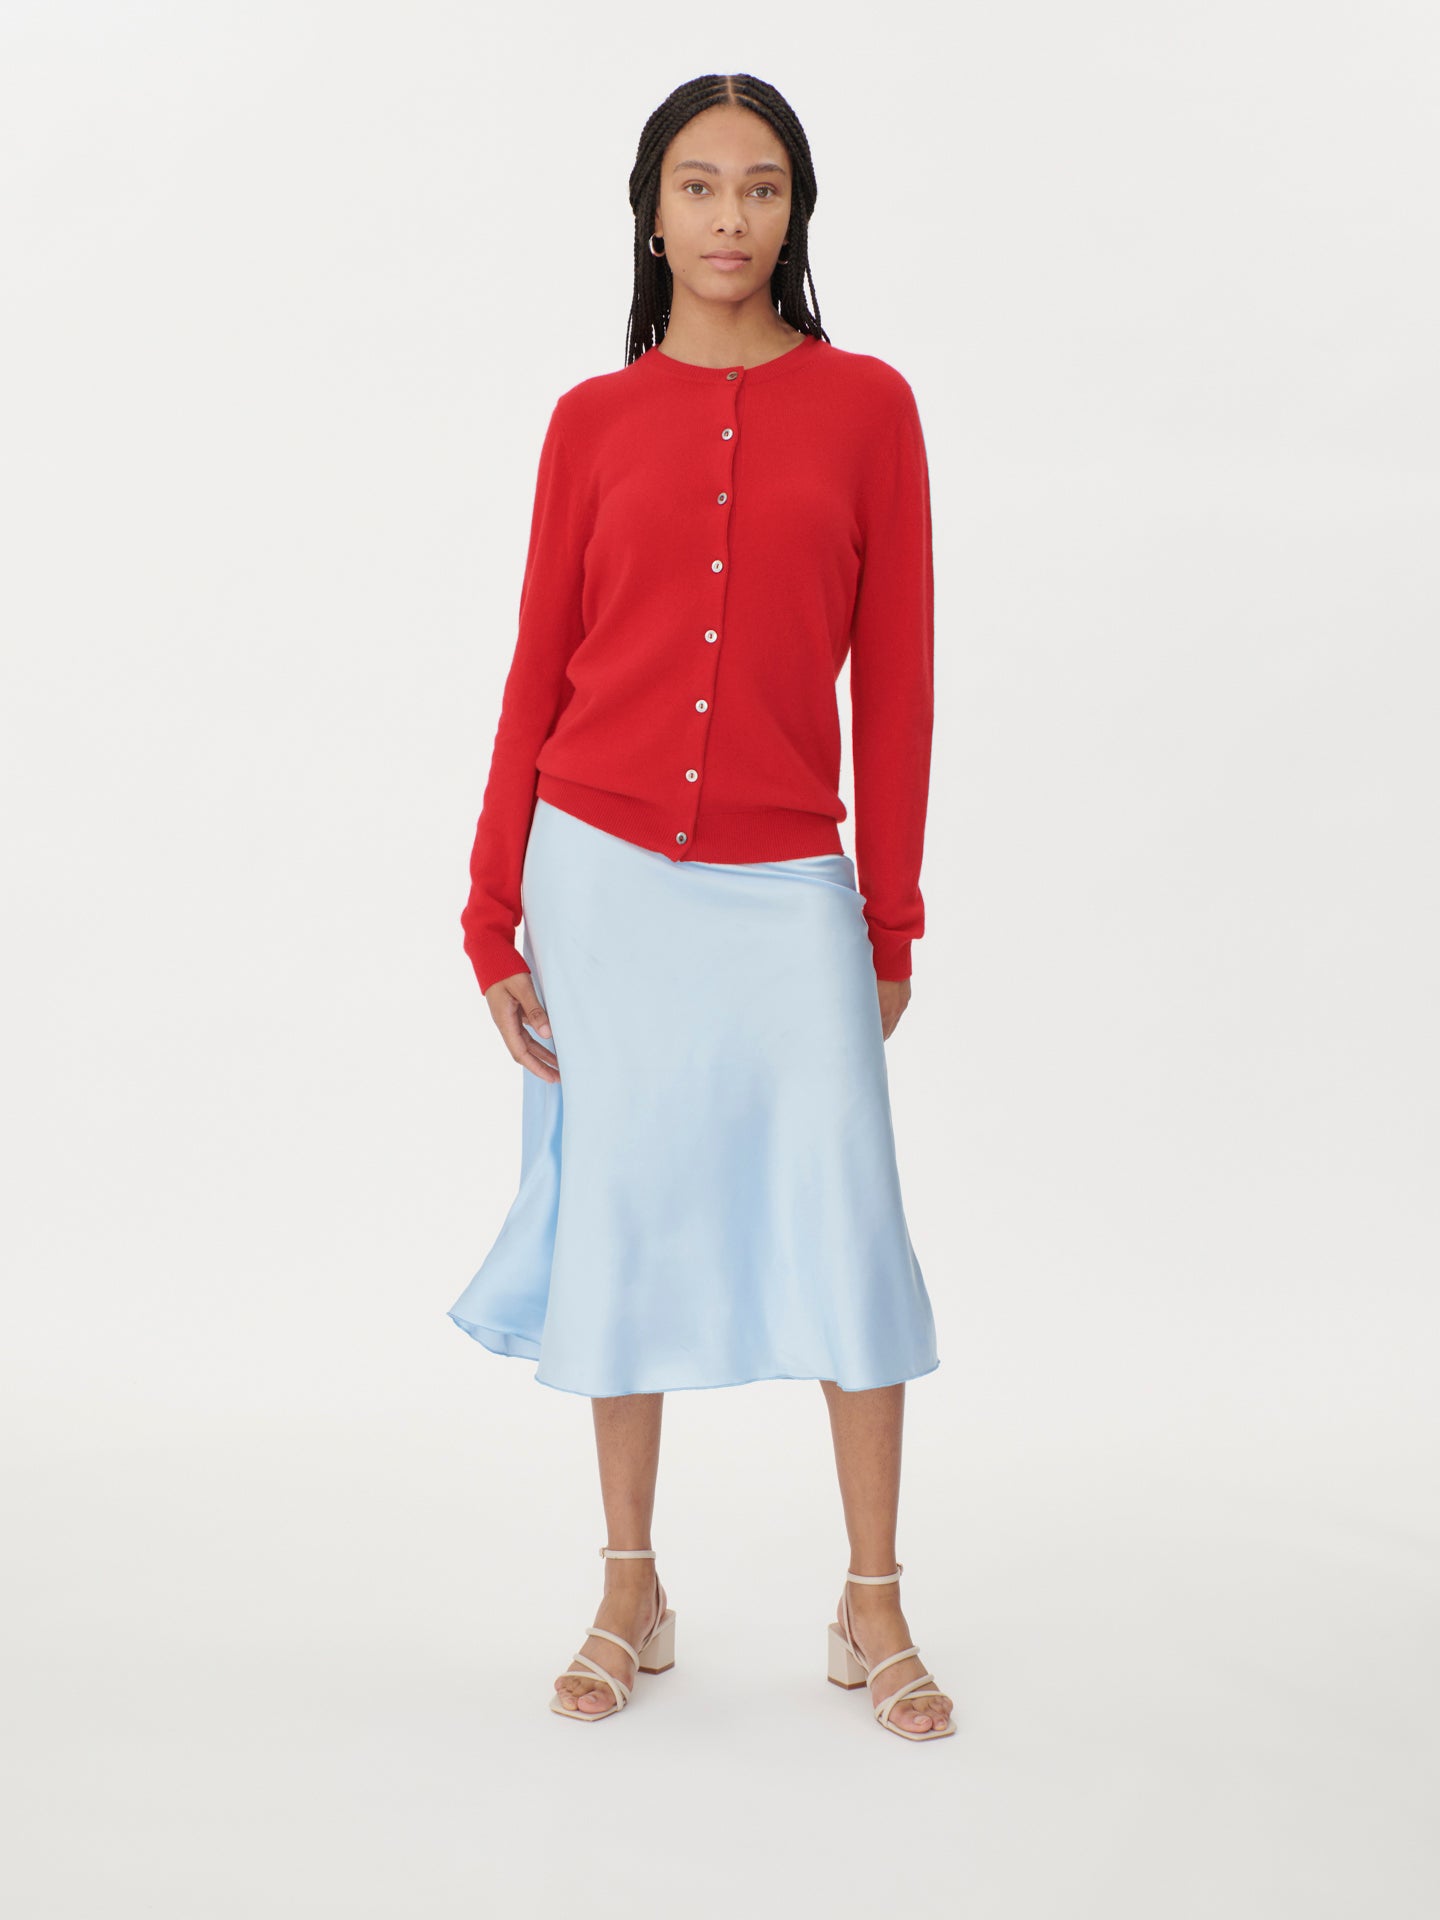 Damen Kaschmir R-Ausschnitt Strickjacke mit Knöpfen Rot - Gobi Cashmere